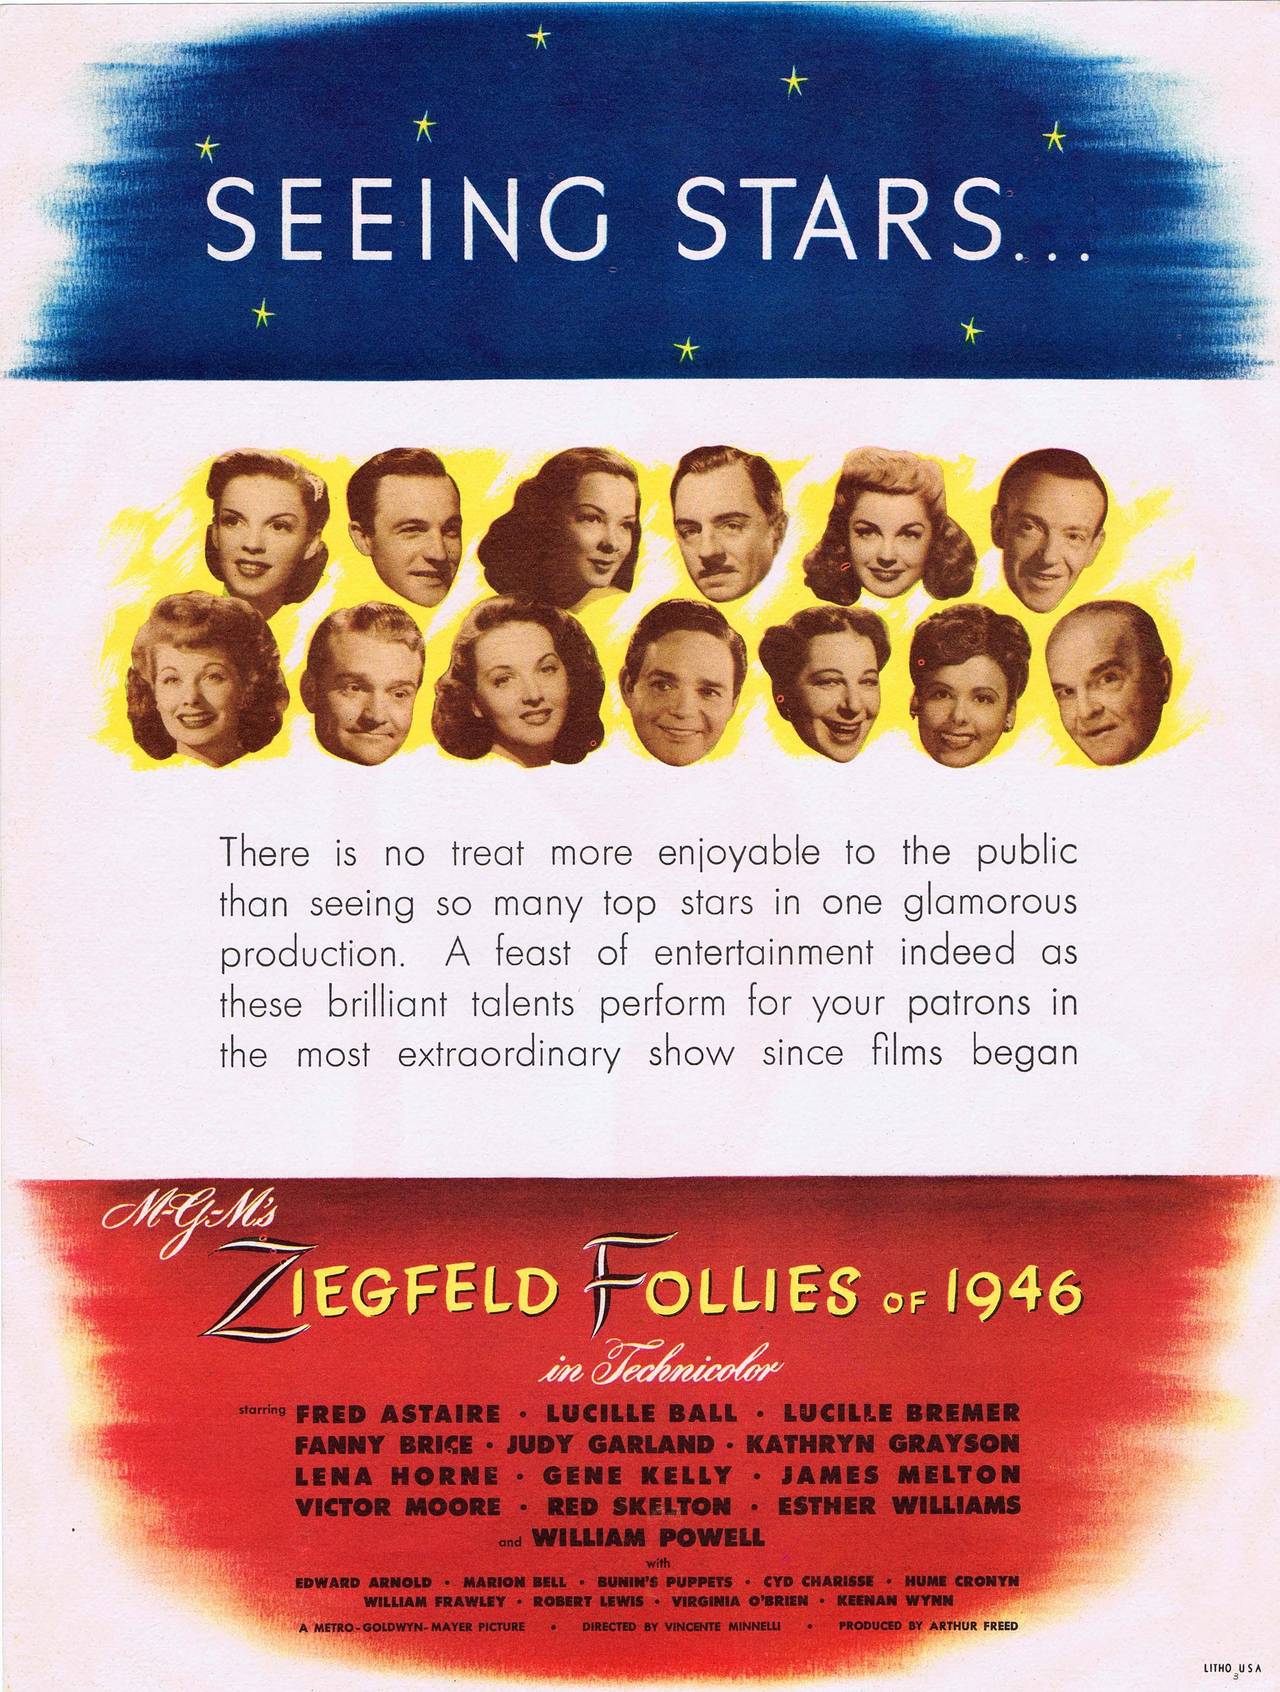 Ziegfeld Follies: Set Of Four Original 'Petty Girls' Pin Up Movie Trade Cards - Print by George Brown Petty IV